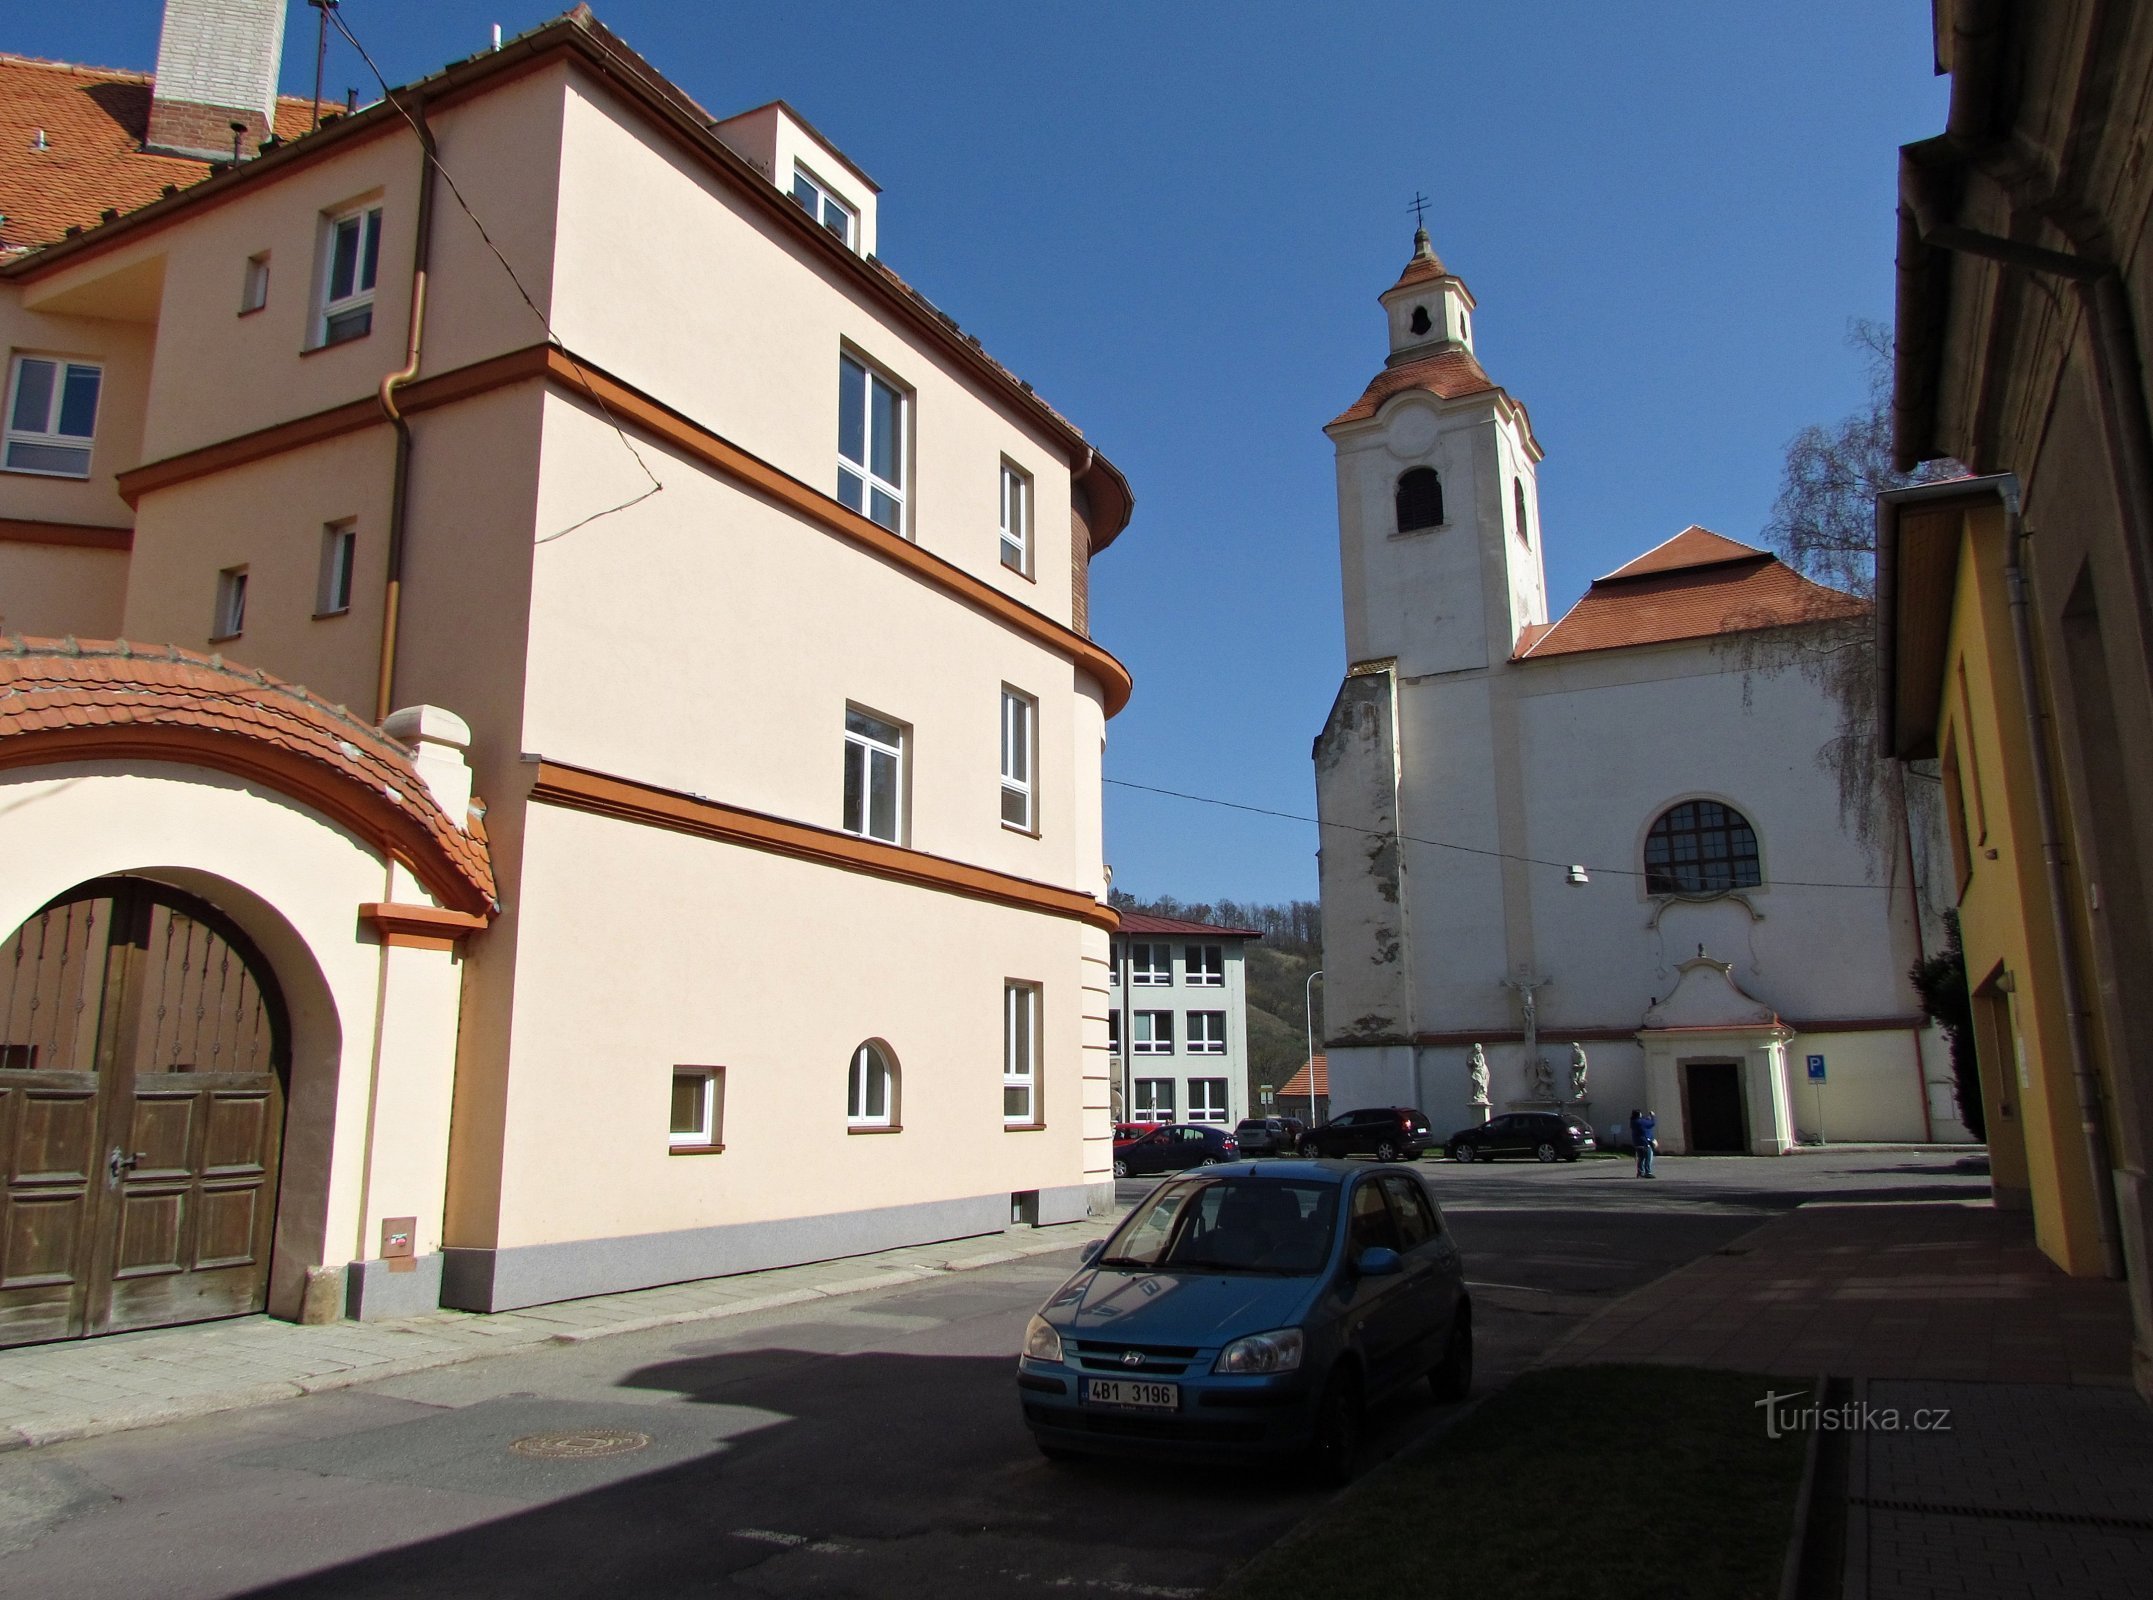 Moravský Krumlov - Εκκλησία του Αγίου Βαρθολομαίου και πρώην μοναστήρι